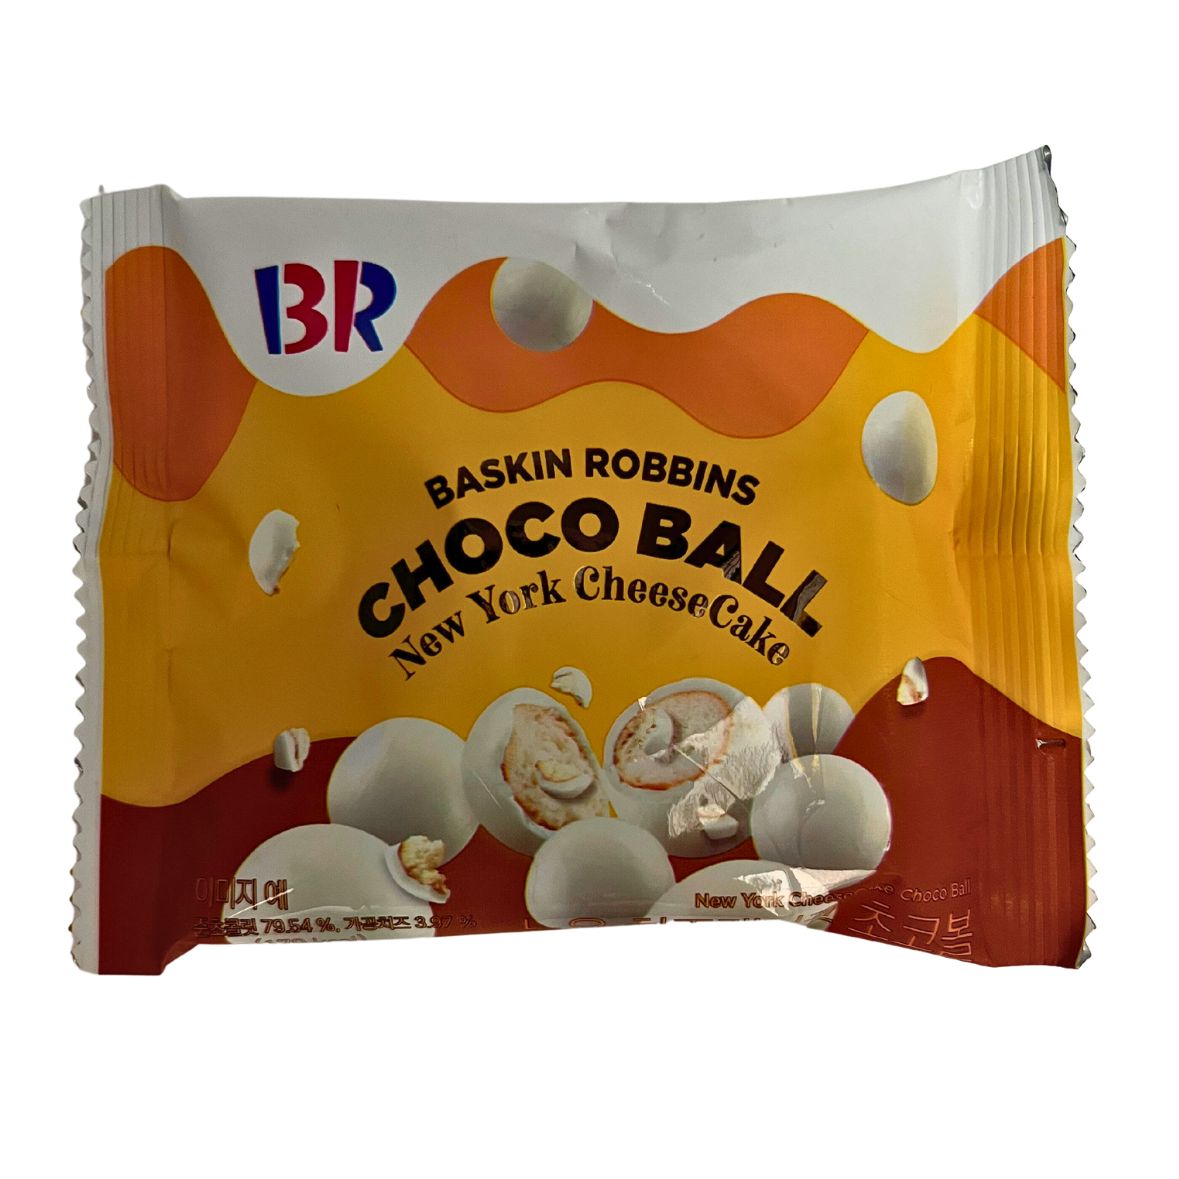 Baskin Robbins Cheesecake Choco Balls